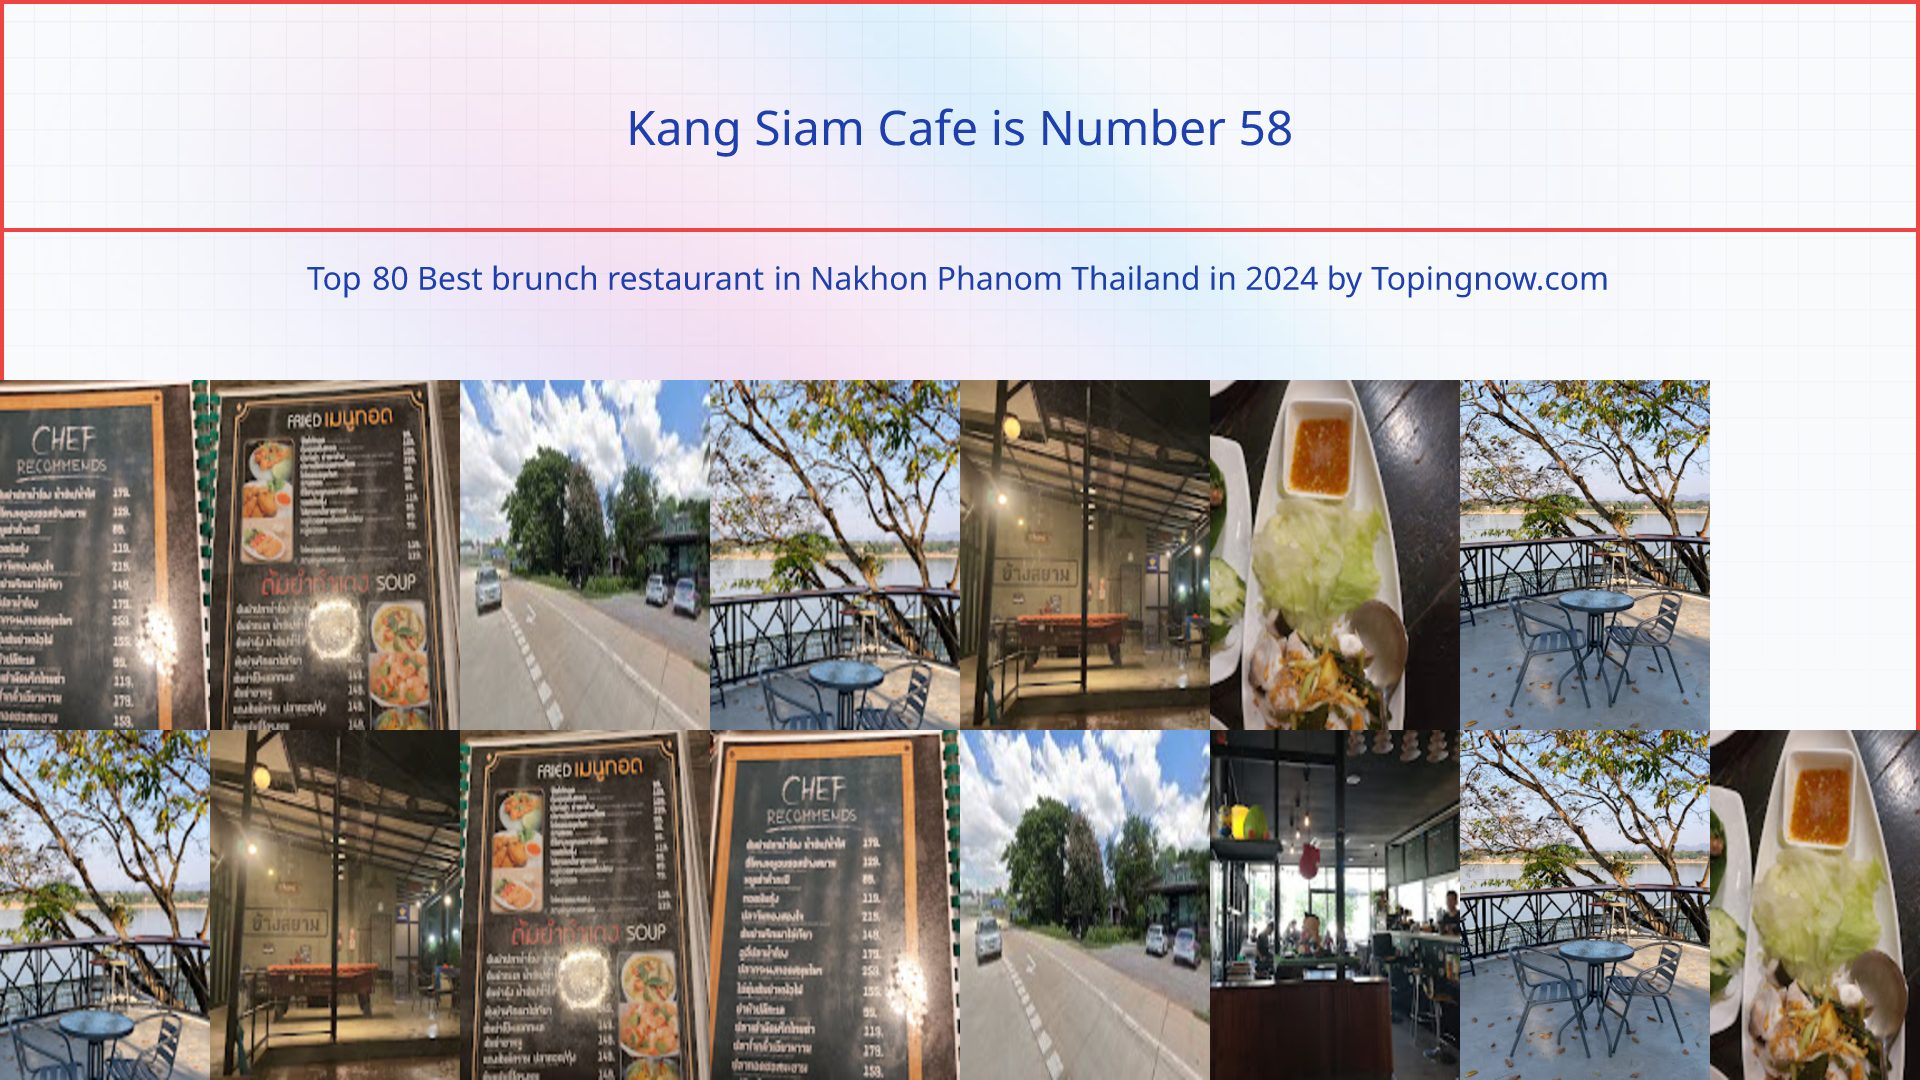 Kang Siam Cafe: Top 80 Best brunch restaurant in Nakhon Phanom Thailand in 2024